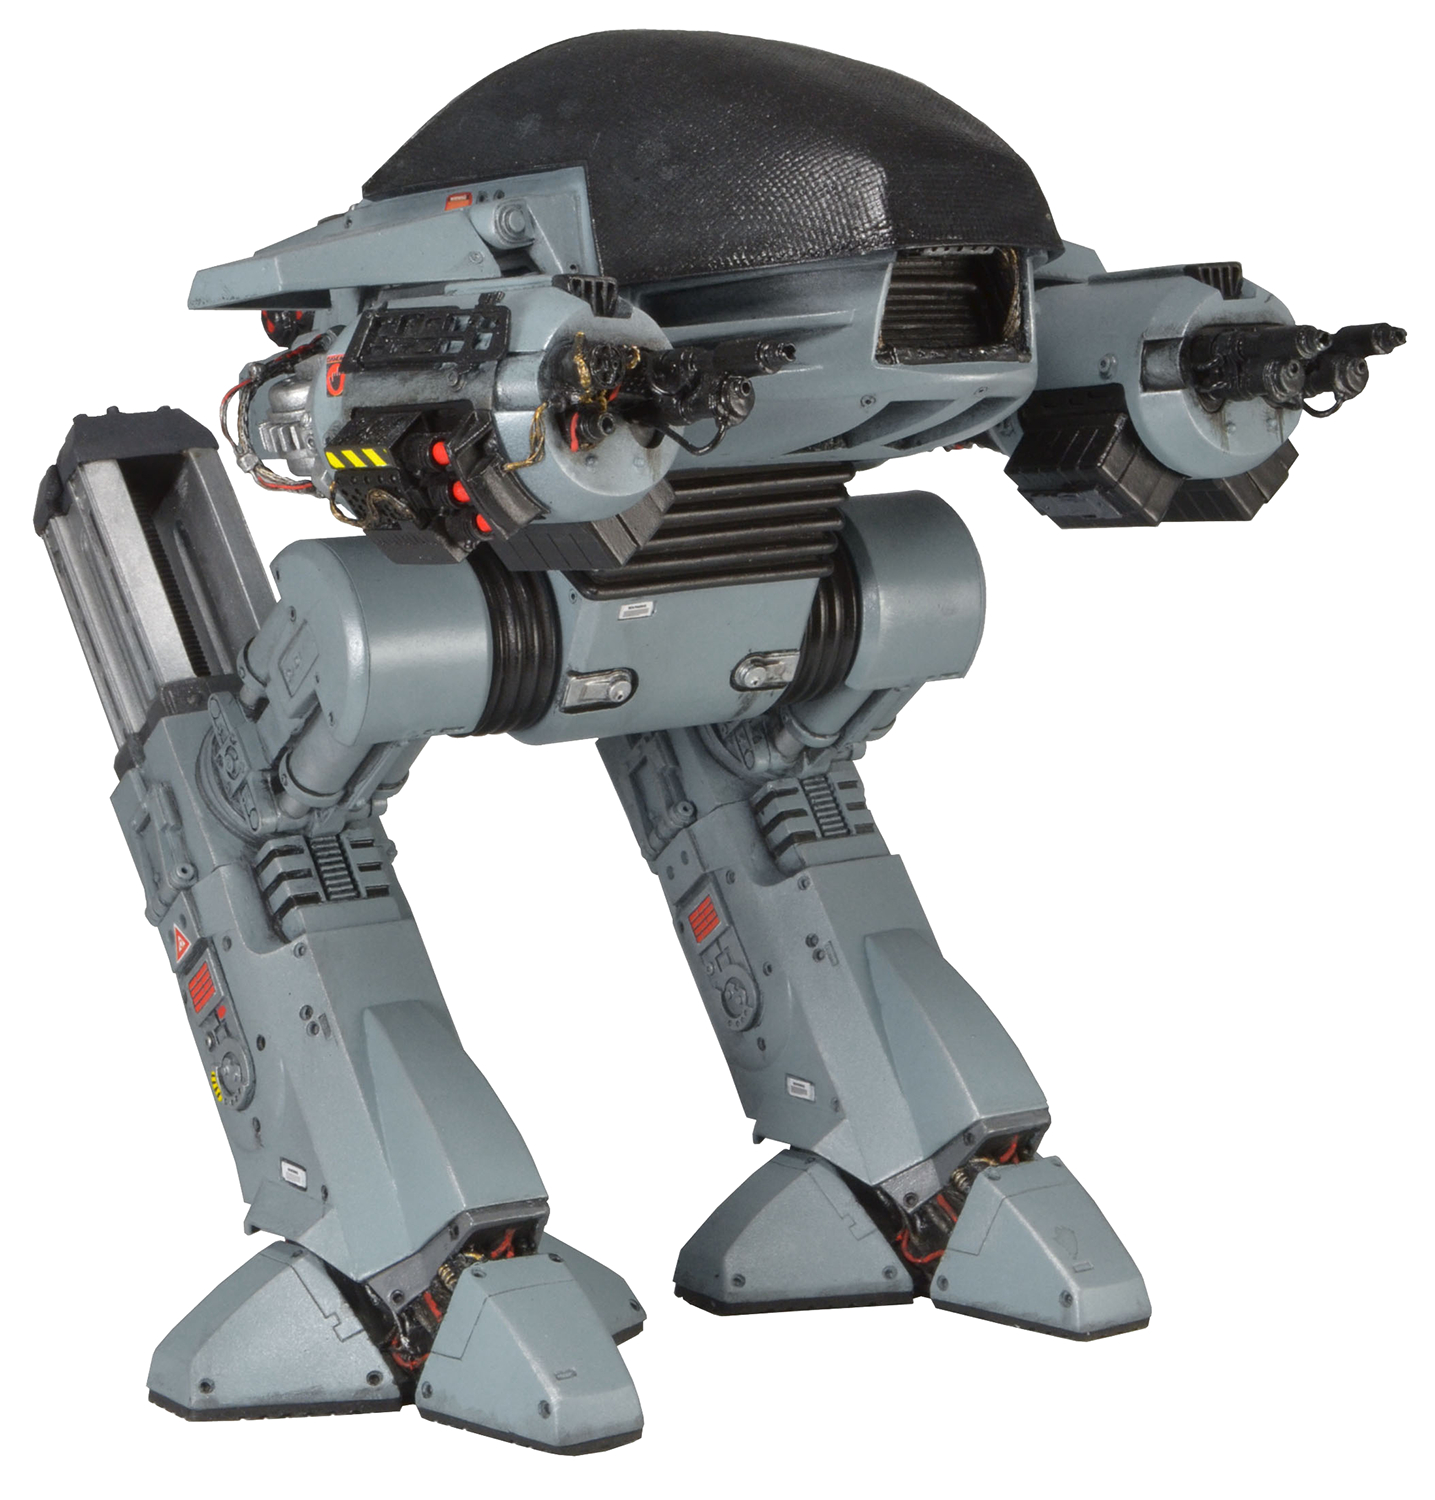 Robocop Ed-209 Boxed Action Figure W/Sound